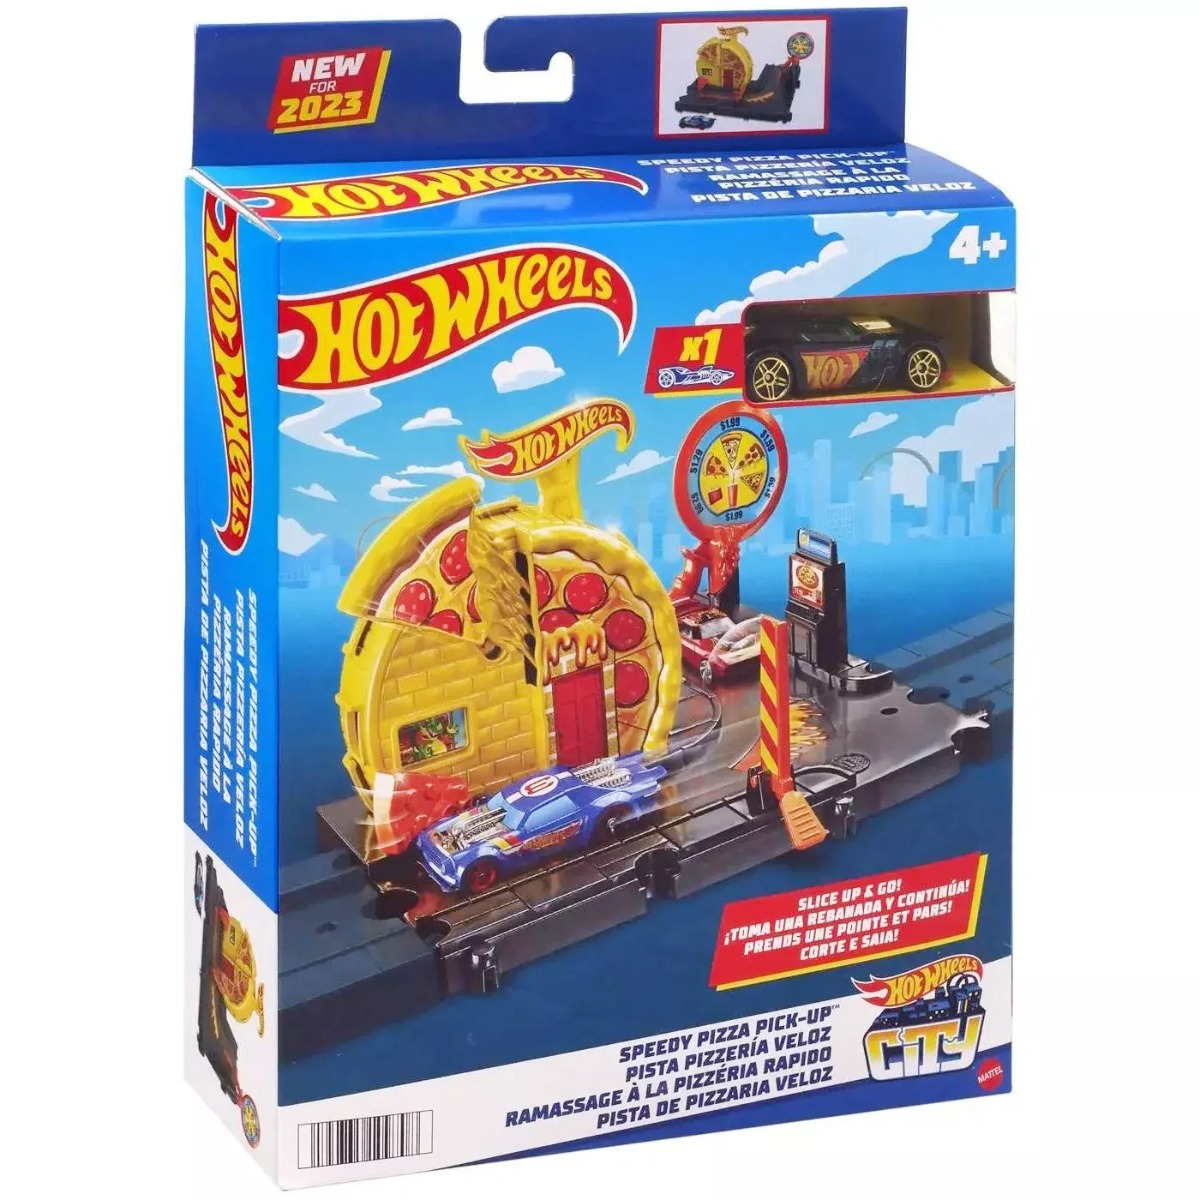 Set de joaca cu masinuta, Hot Wheels, Speedy Pizza Pick-Up, HKX44